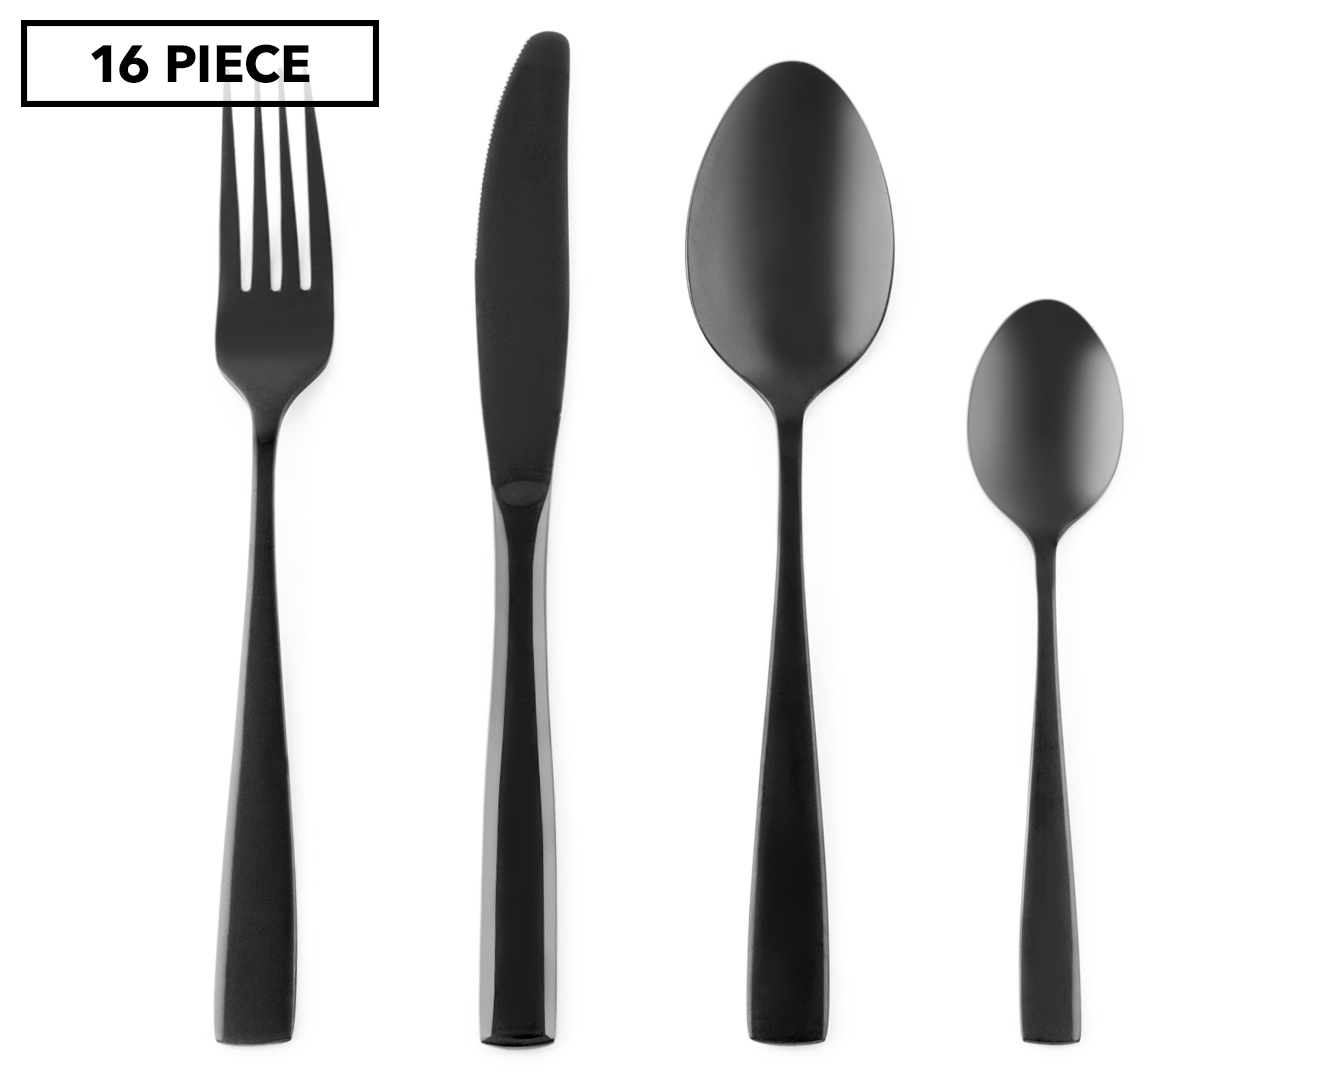 Portobello by Inspire Regal 16-Piece Stainless Steel Cutlery Set - Ebony